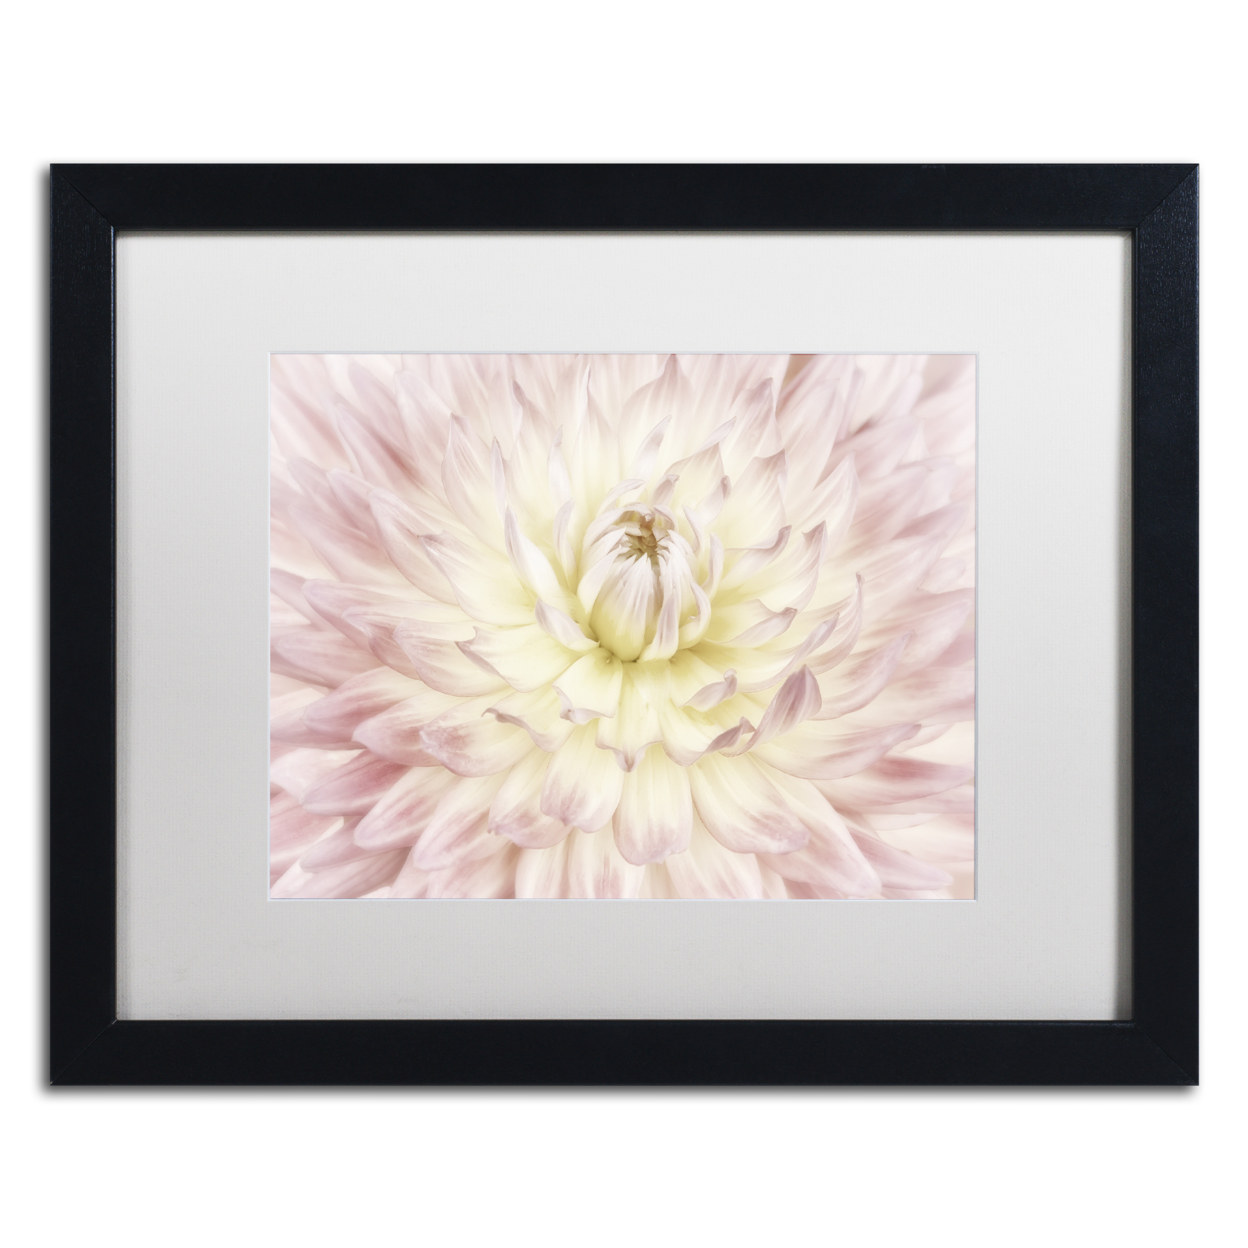 Cora Niele 'Dahlia Flower' Black Wooden Framed Art 18 X 22 Inches